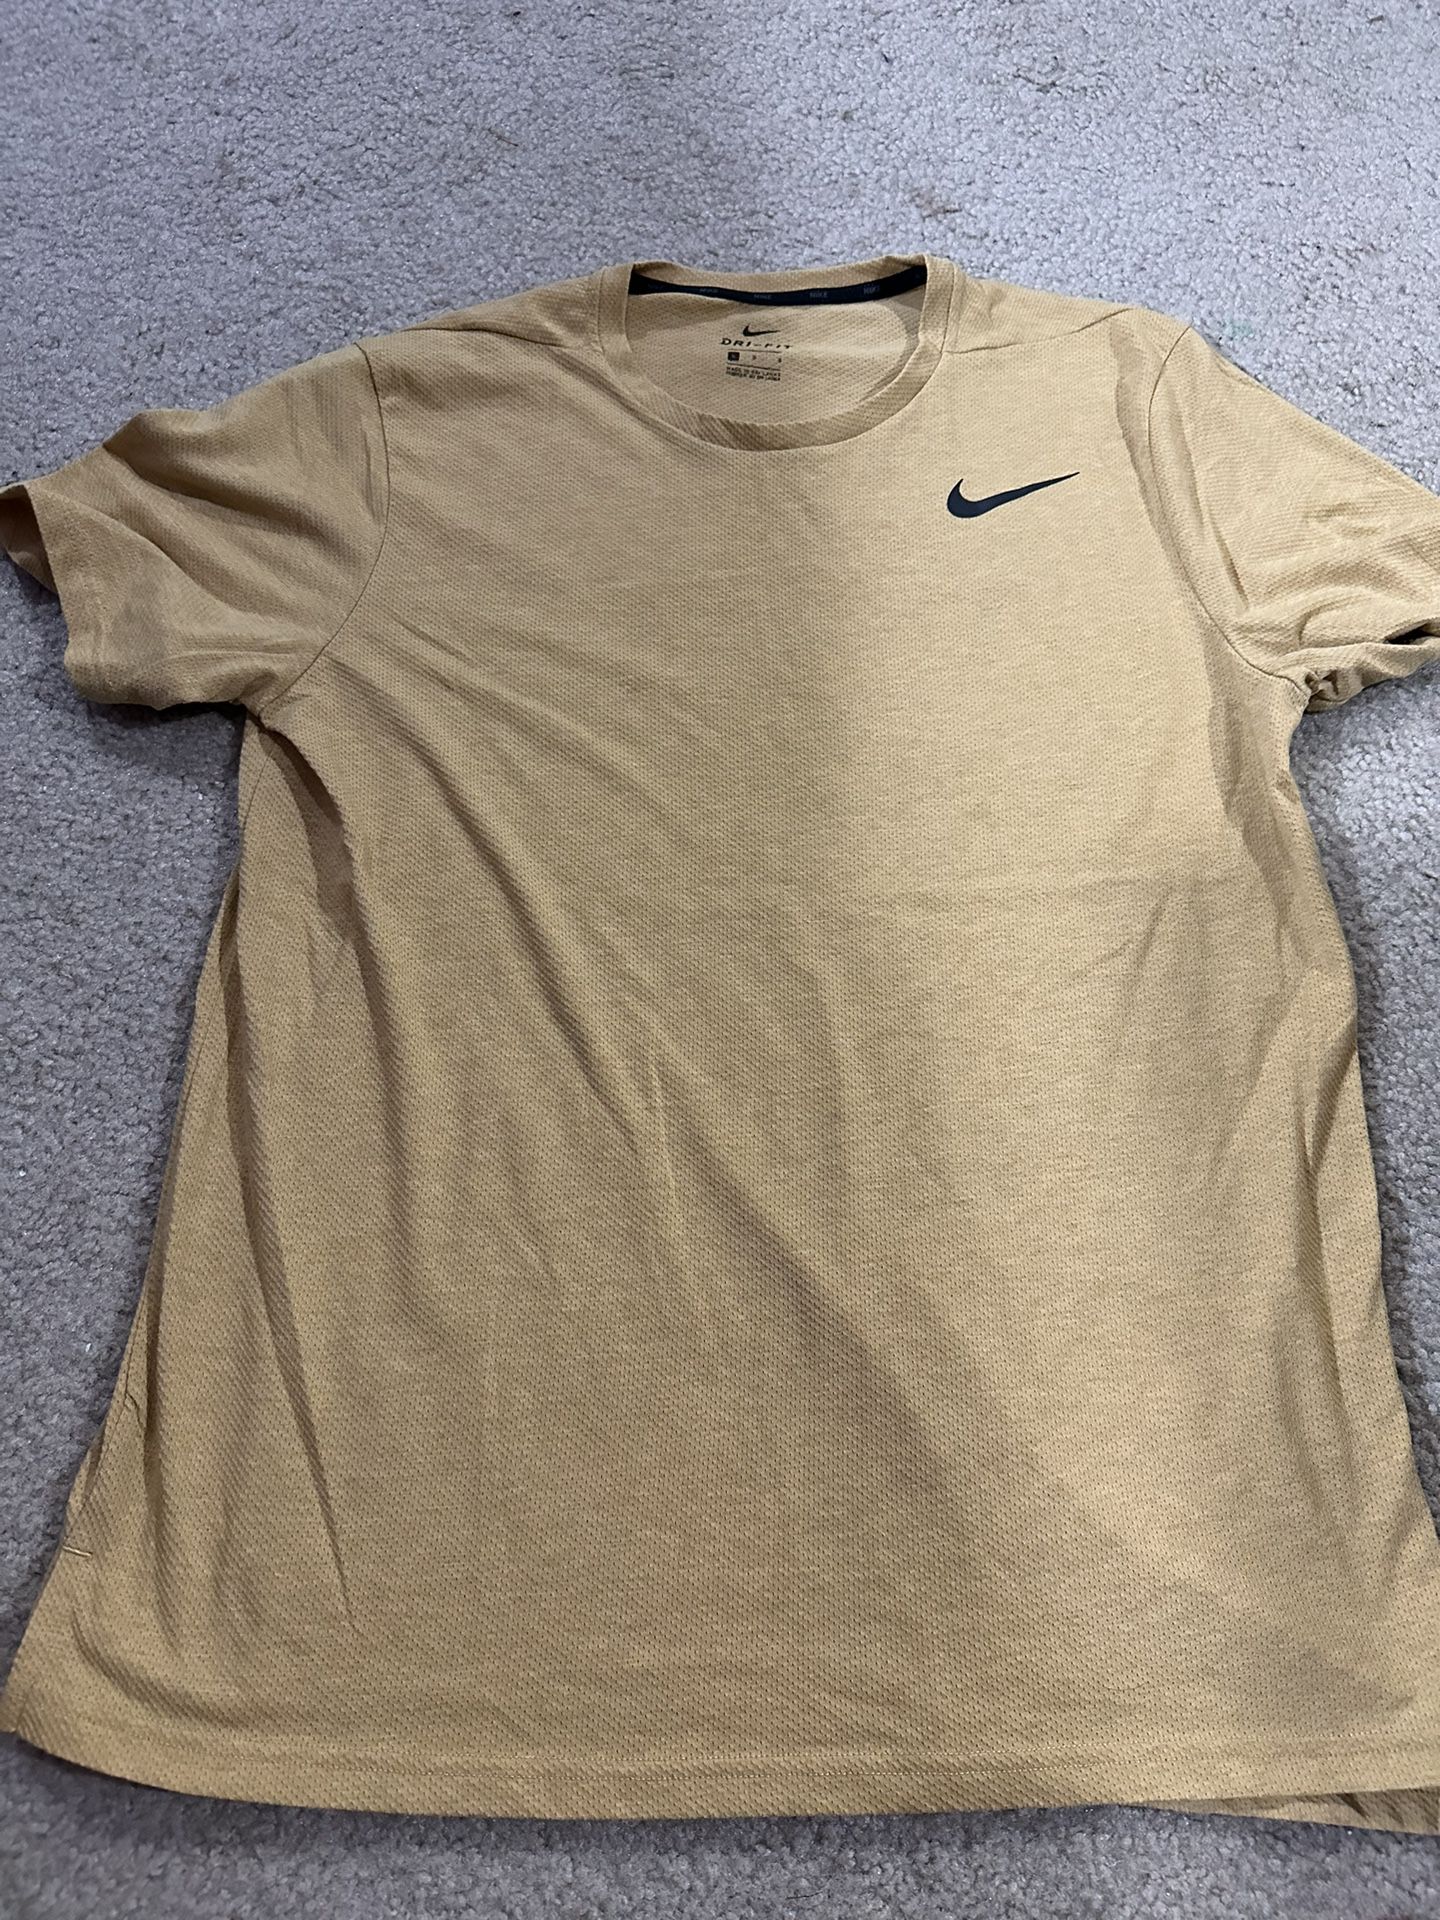 Men’s Dry Fit Nike T-Shirt